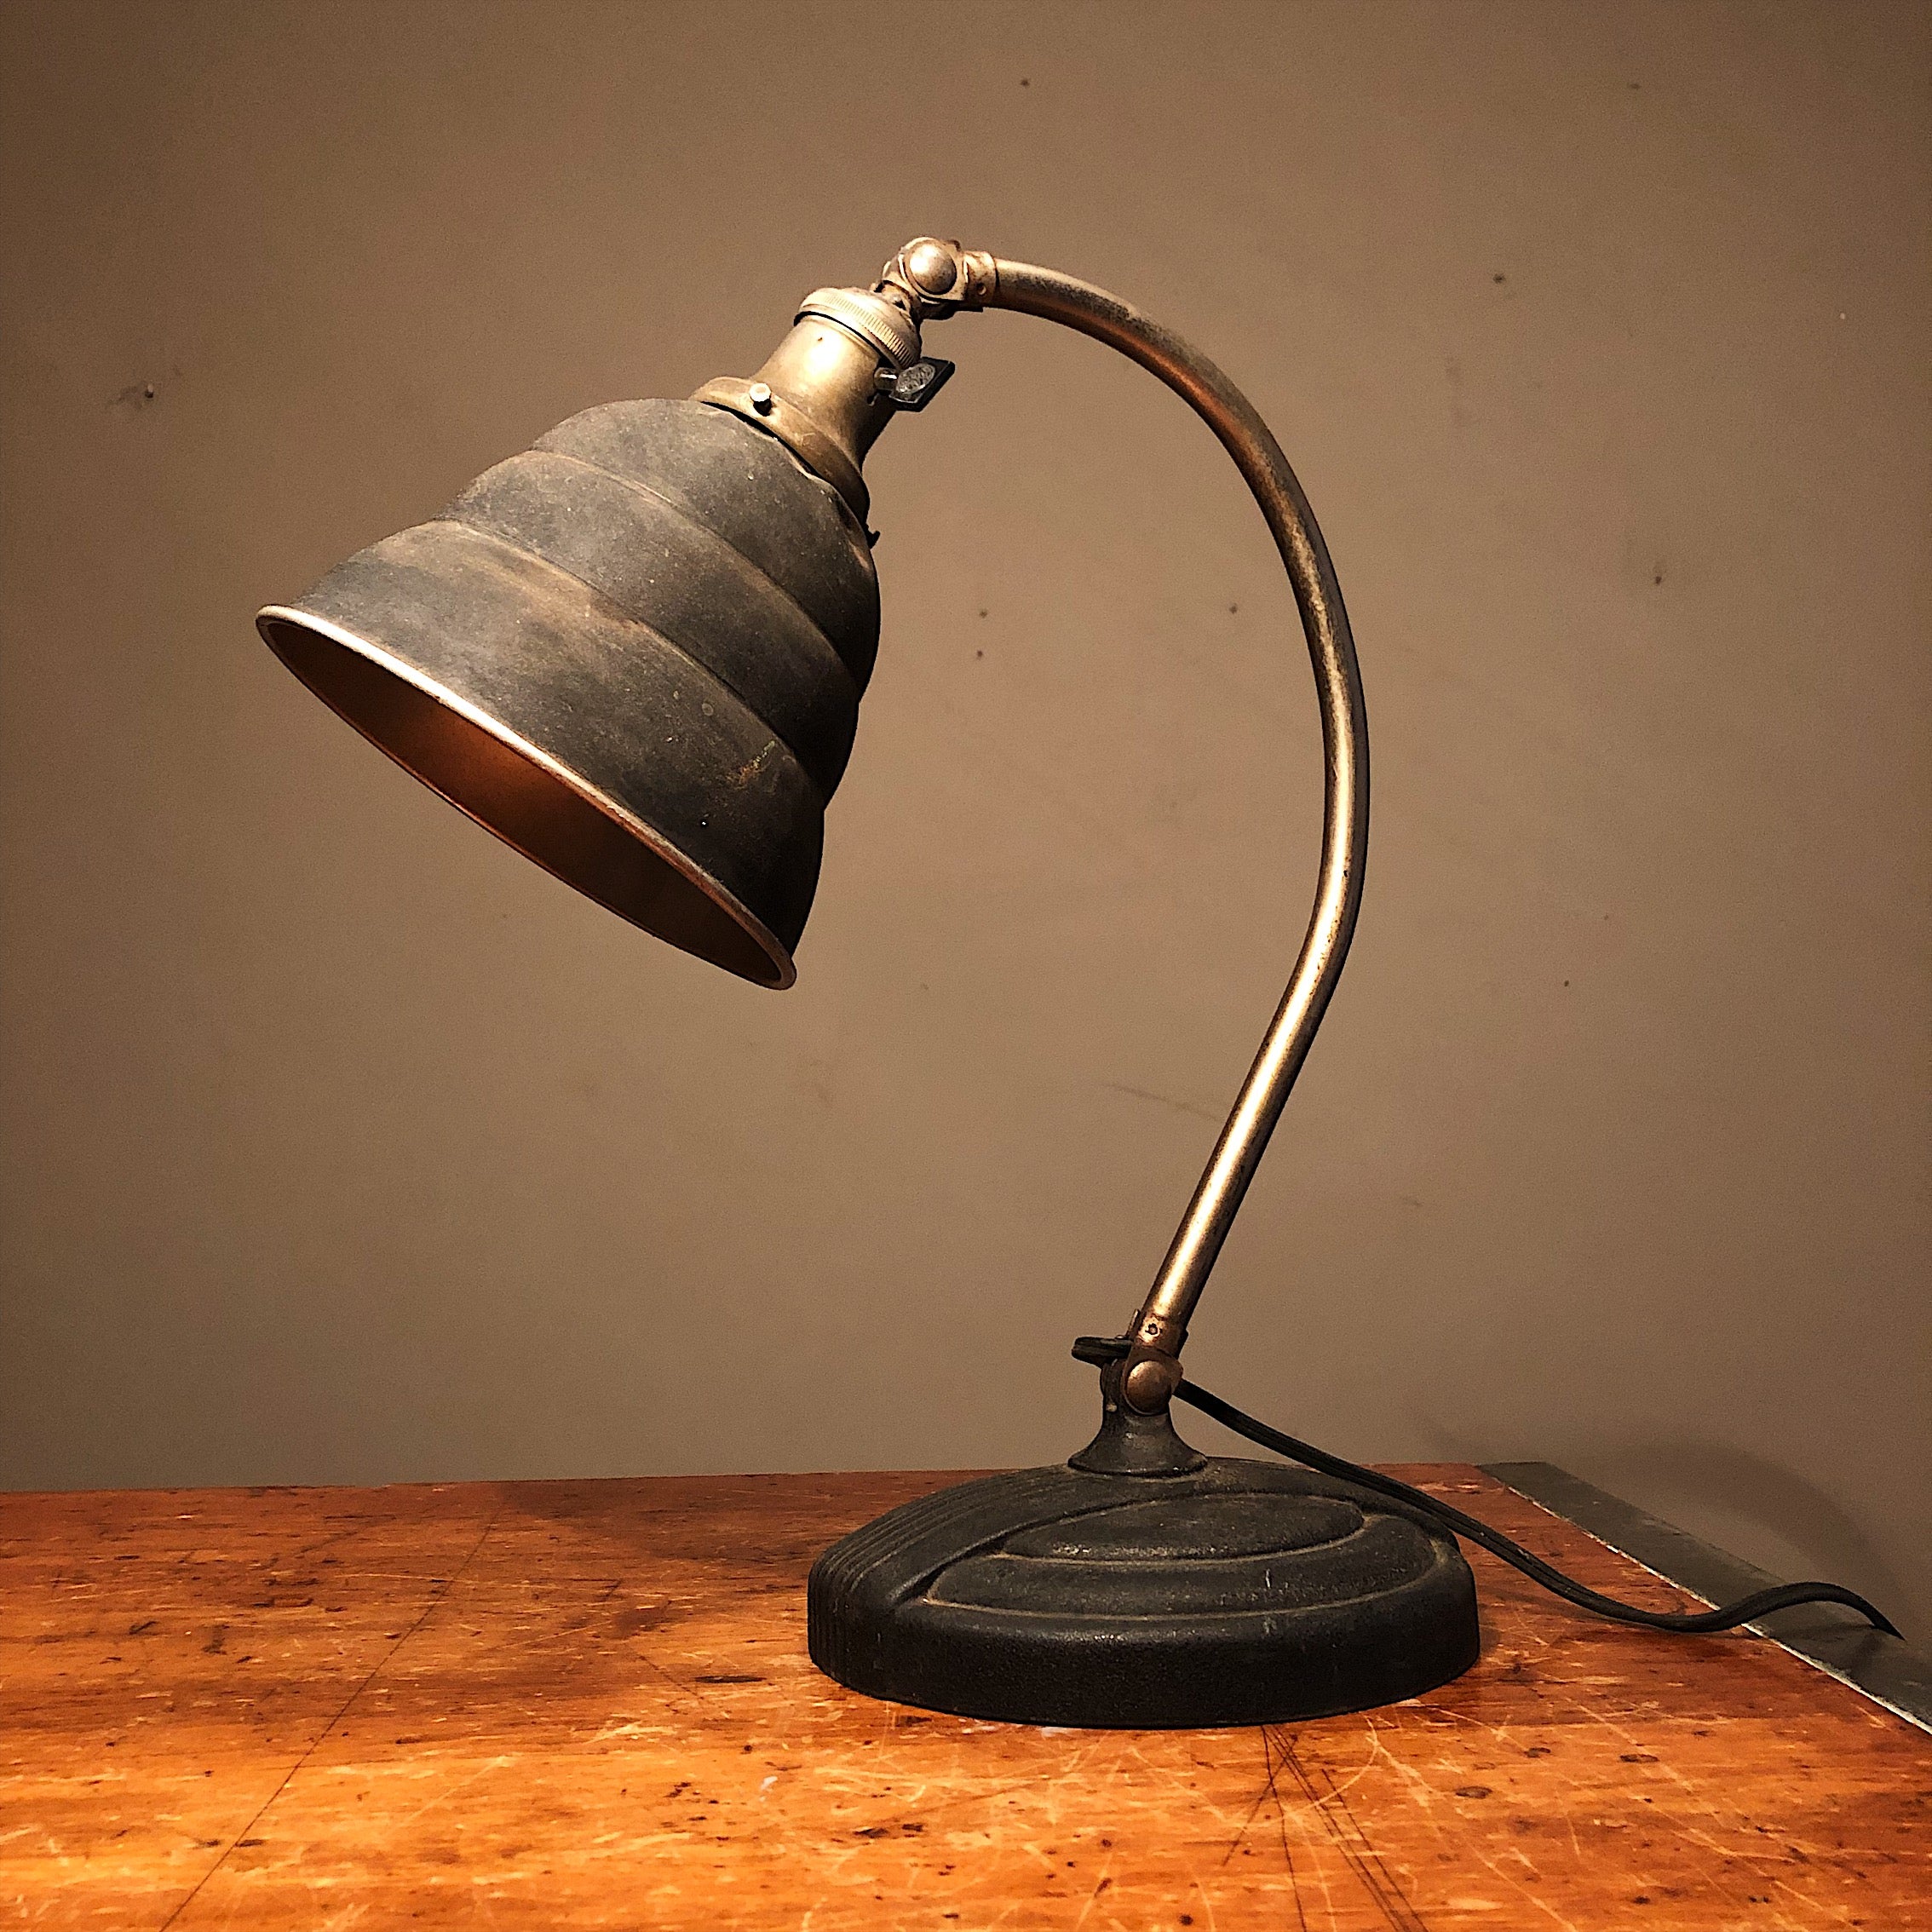 Vintage Industrial Articulating Desk Lamp - General Electric - Rare Art Deco Light - Decor - Black and Tan